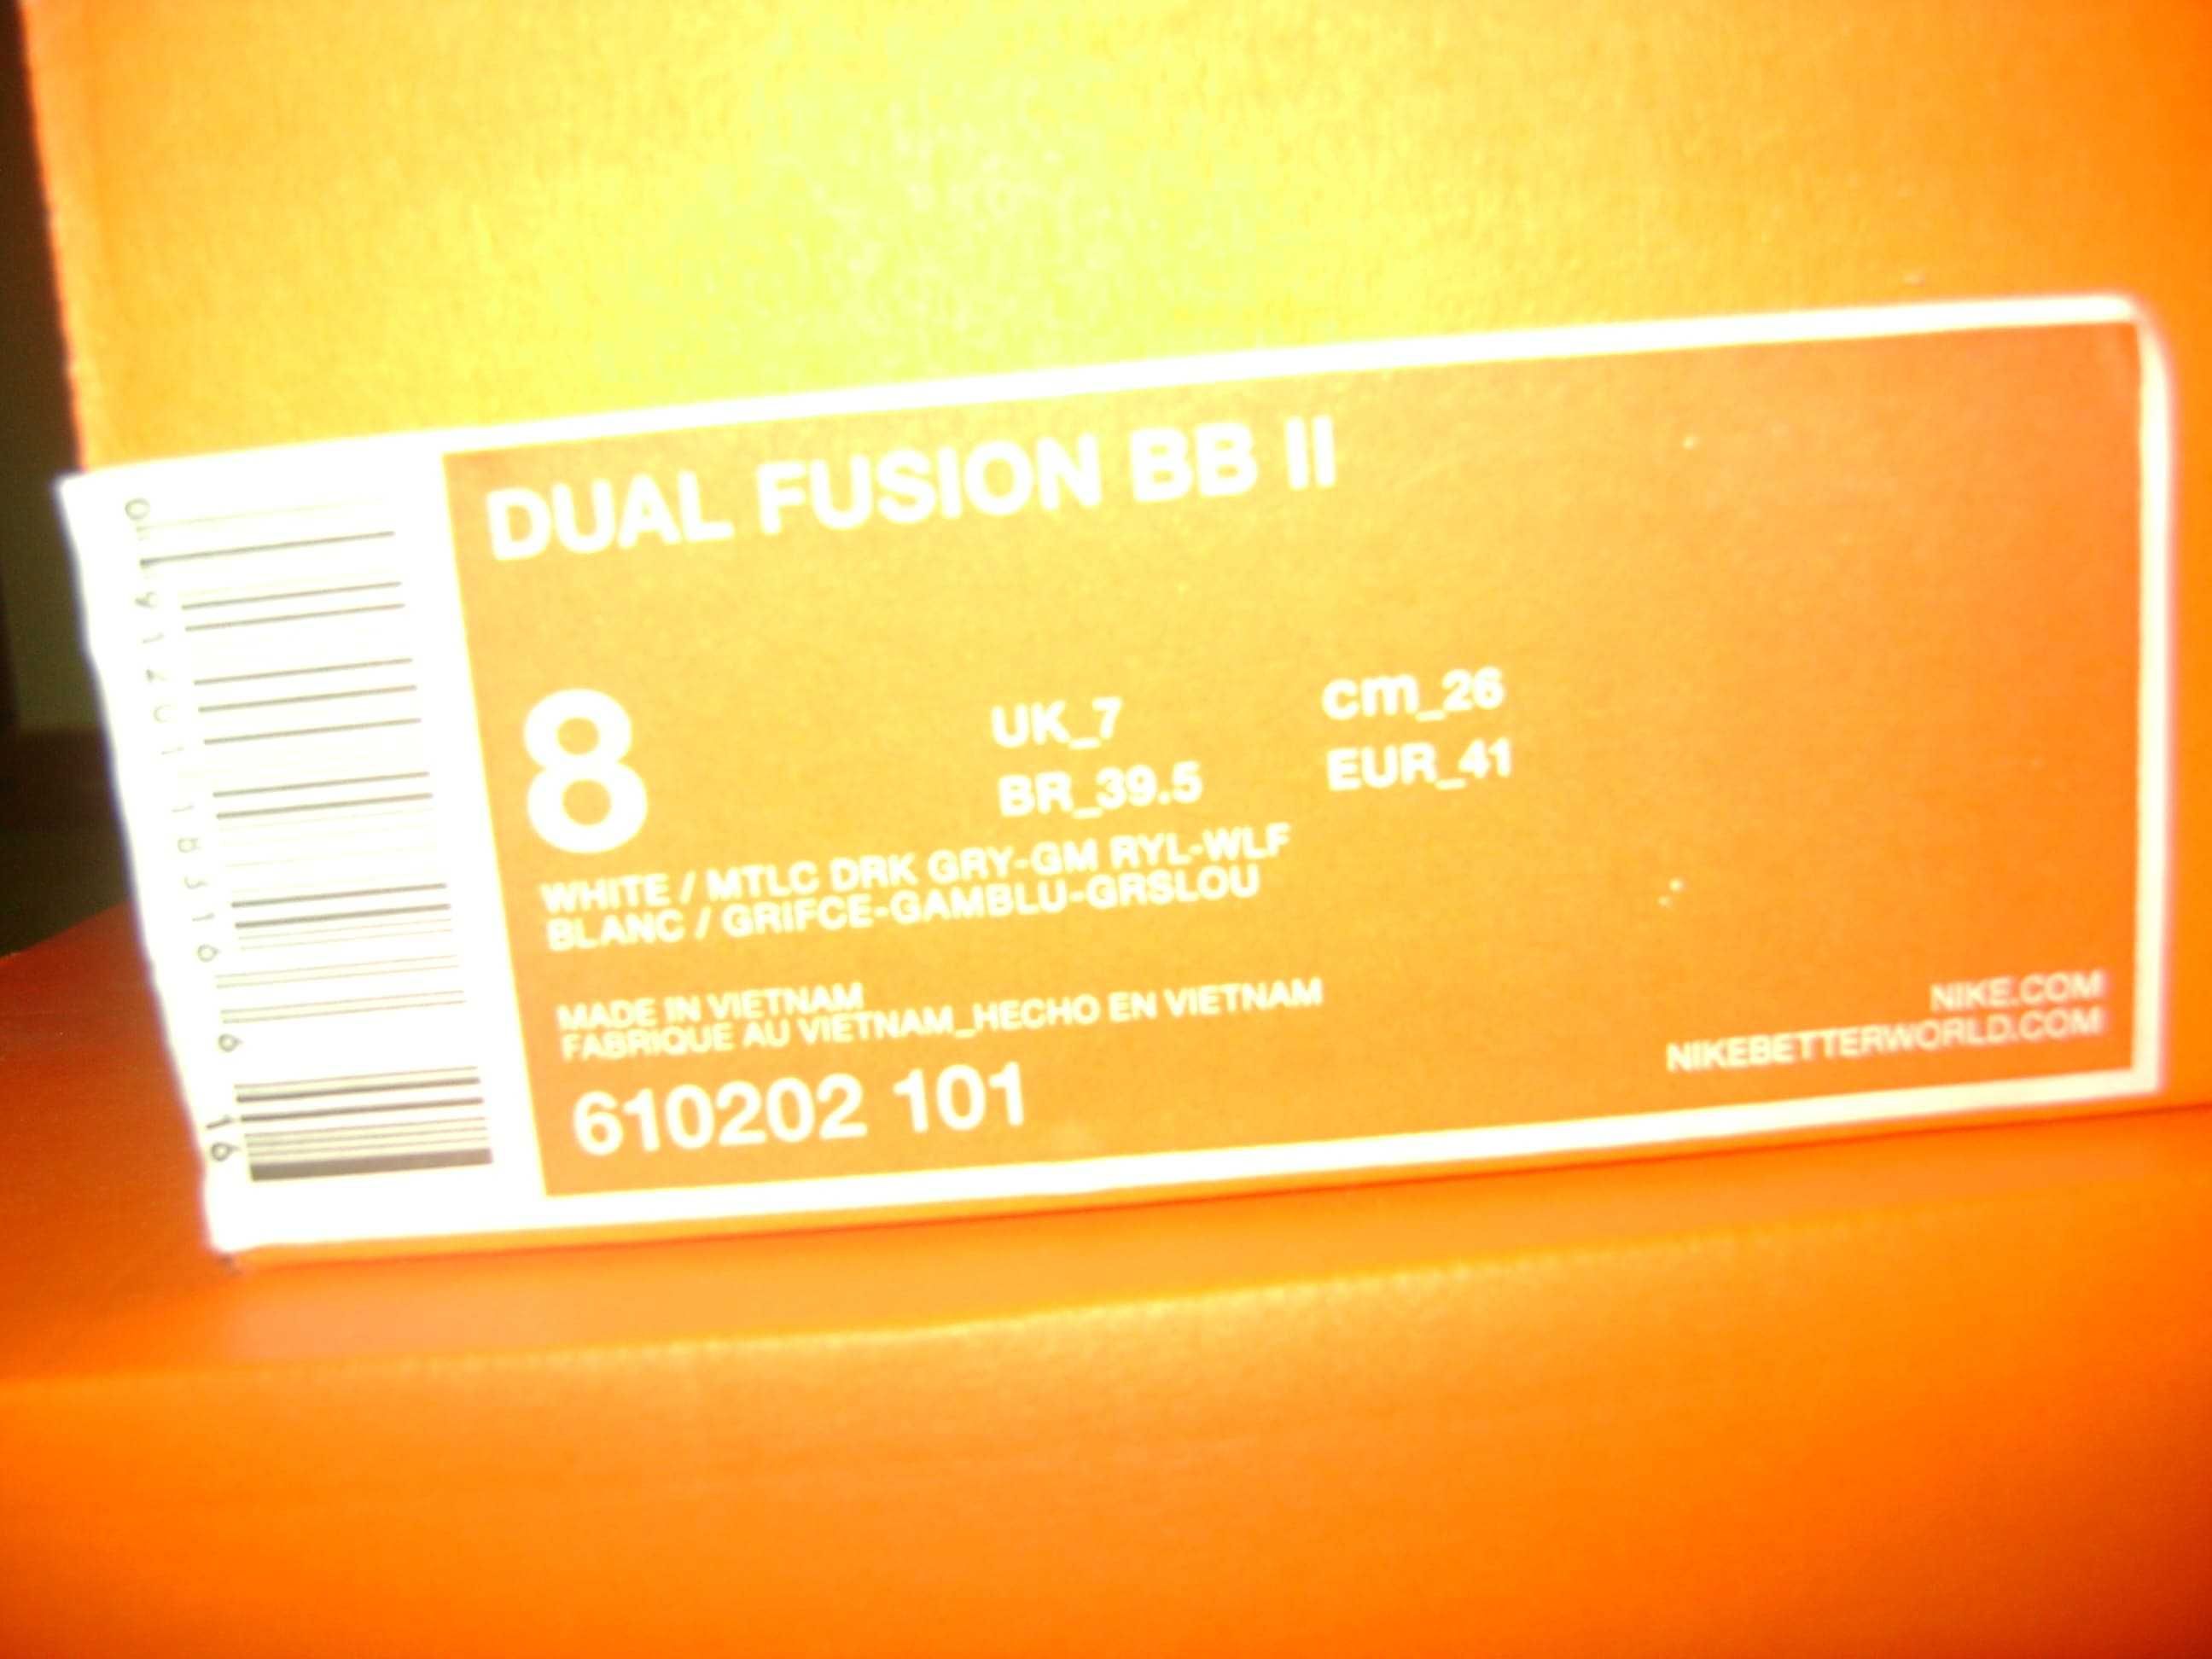 Sapatilhas Nike Dual Fusion BB II - COMO NOVAS